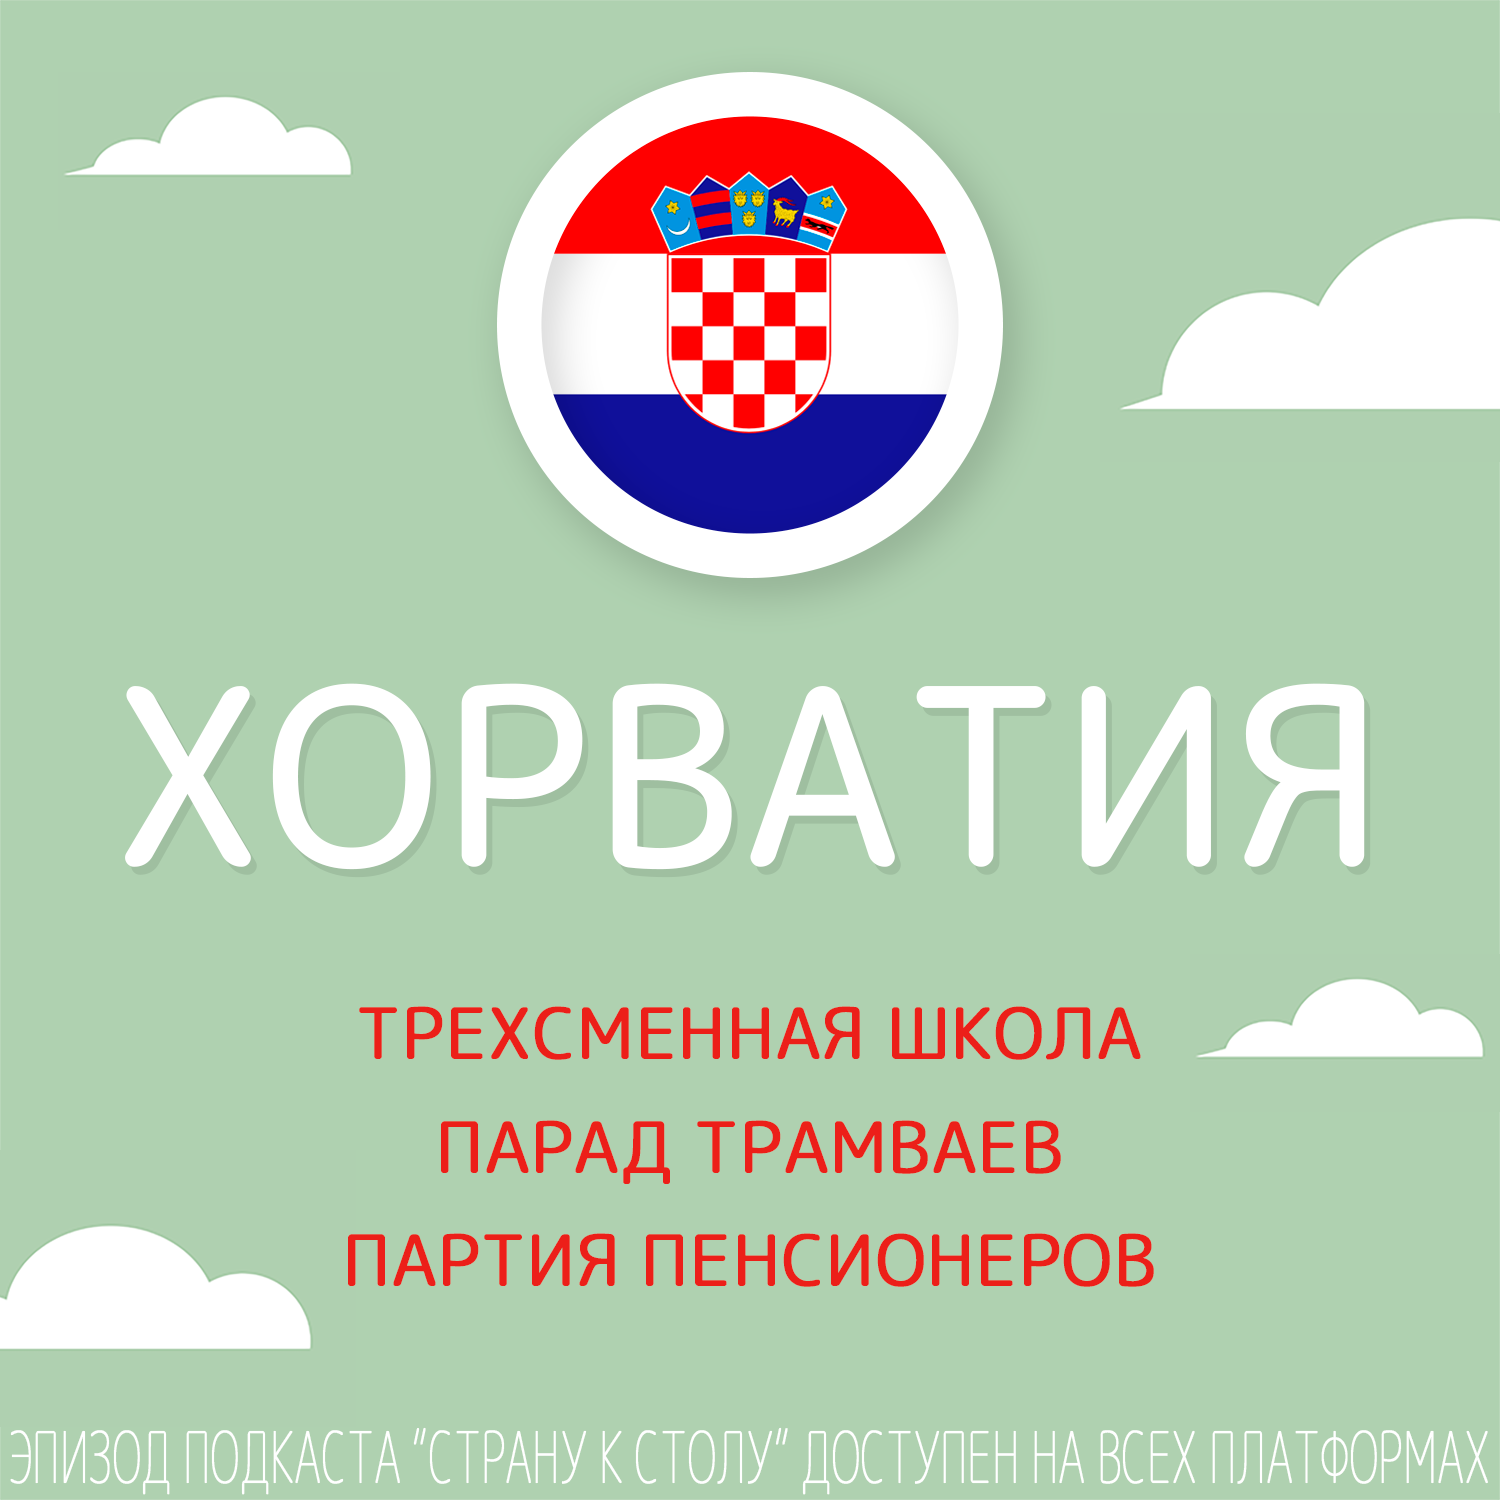 Хорватия: трехсменная школа, парад трамваев и партия пенсионеров